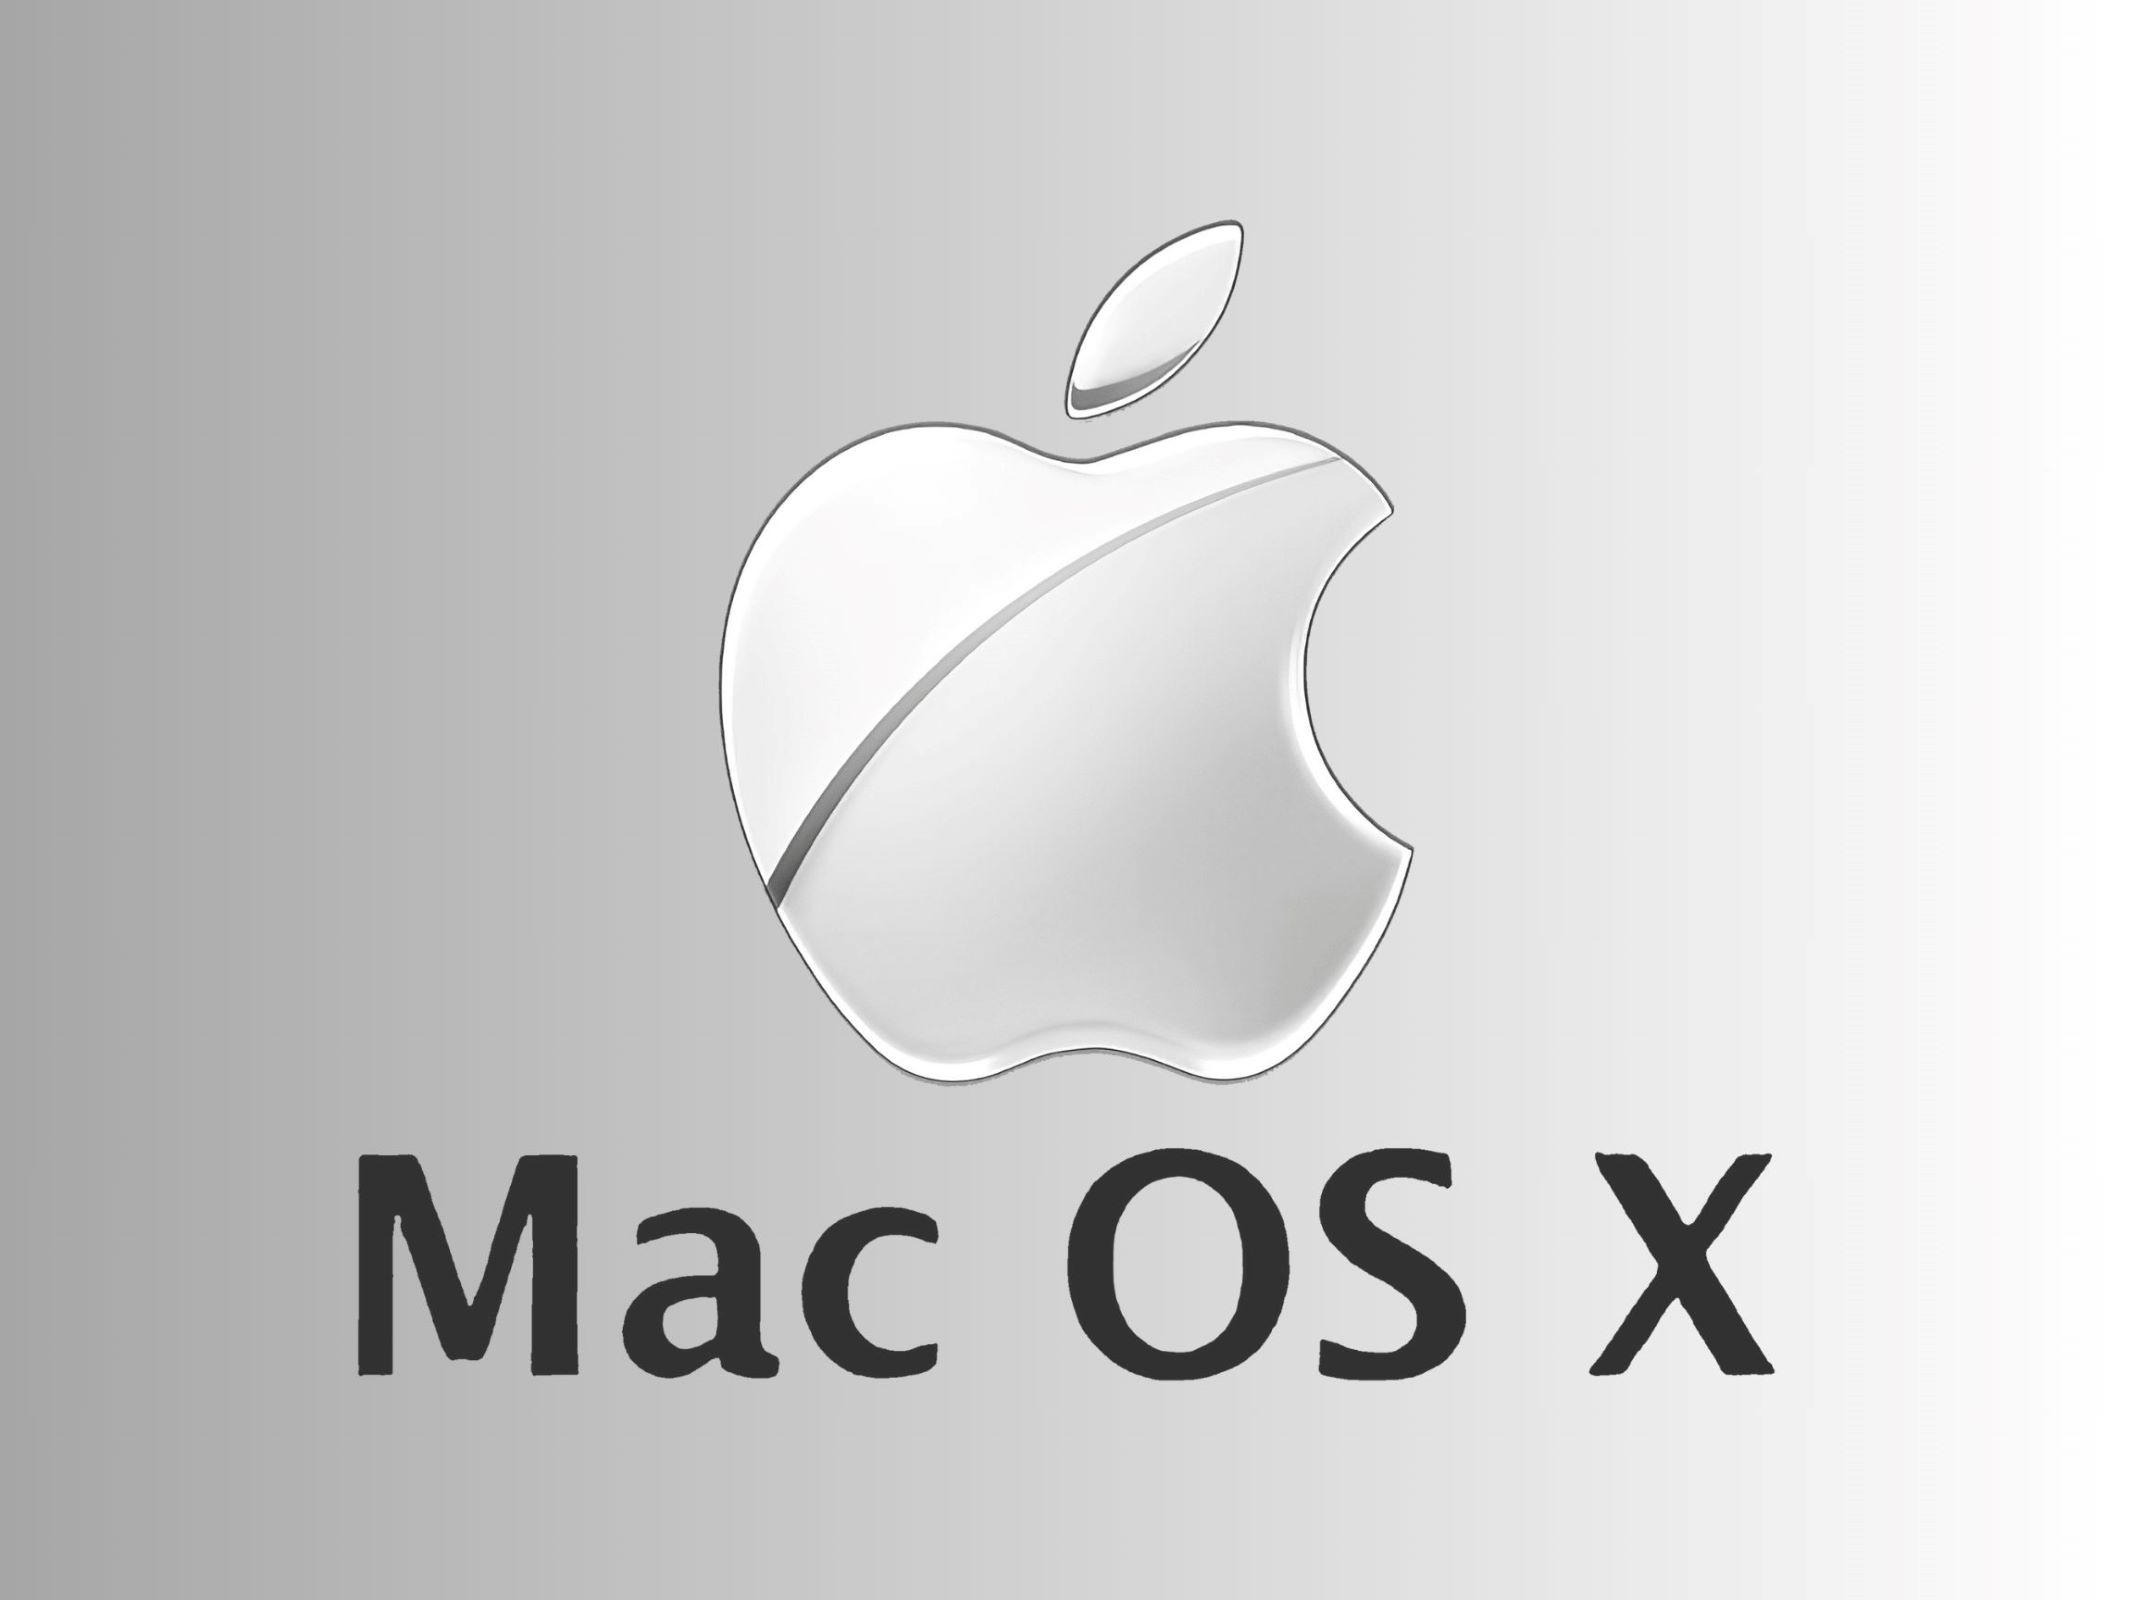 USB Gamepad Installation On OS X: Step-by-Step